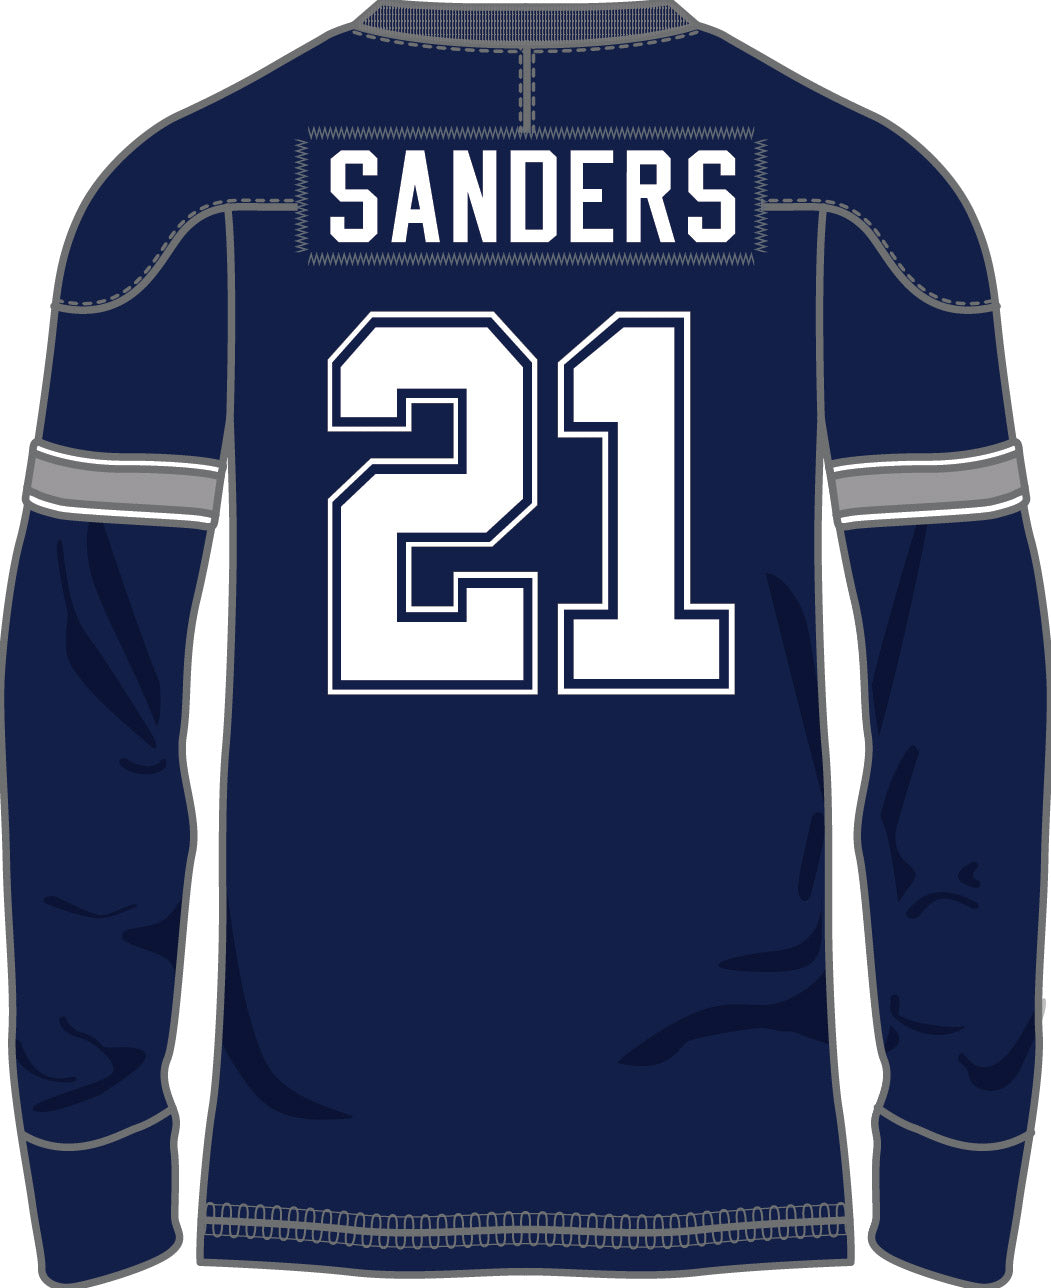 Deion Sanders Dallas Cowboys Throwback Retired Player Super Bowl Patch Long Sleeve Shirt - Dynasty Sports & Framing 